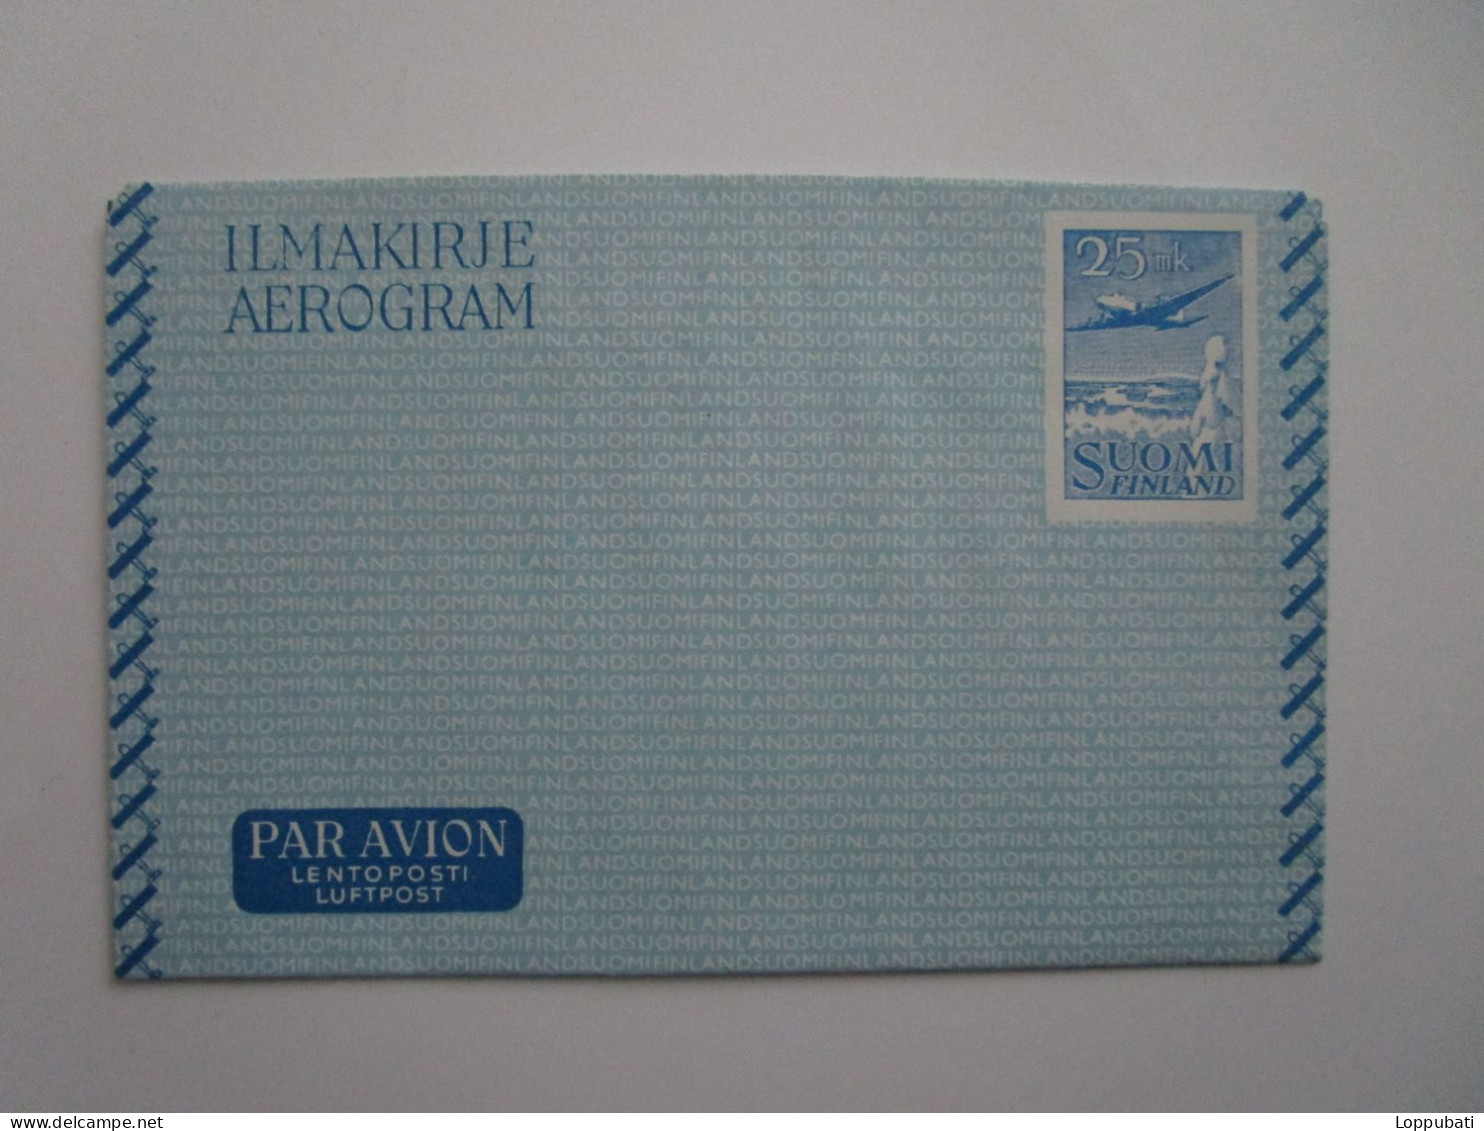 Finnland Luftpost-Aerogram  25 MK. - Used Stamps